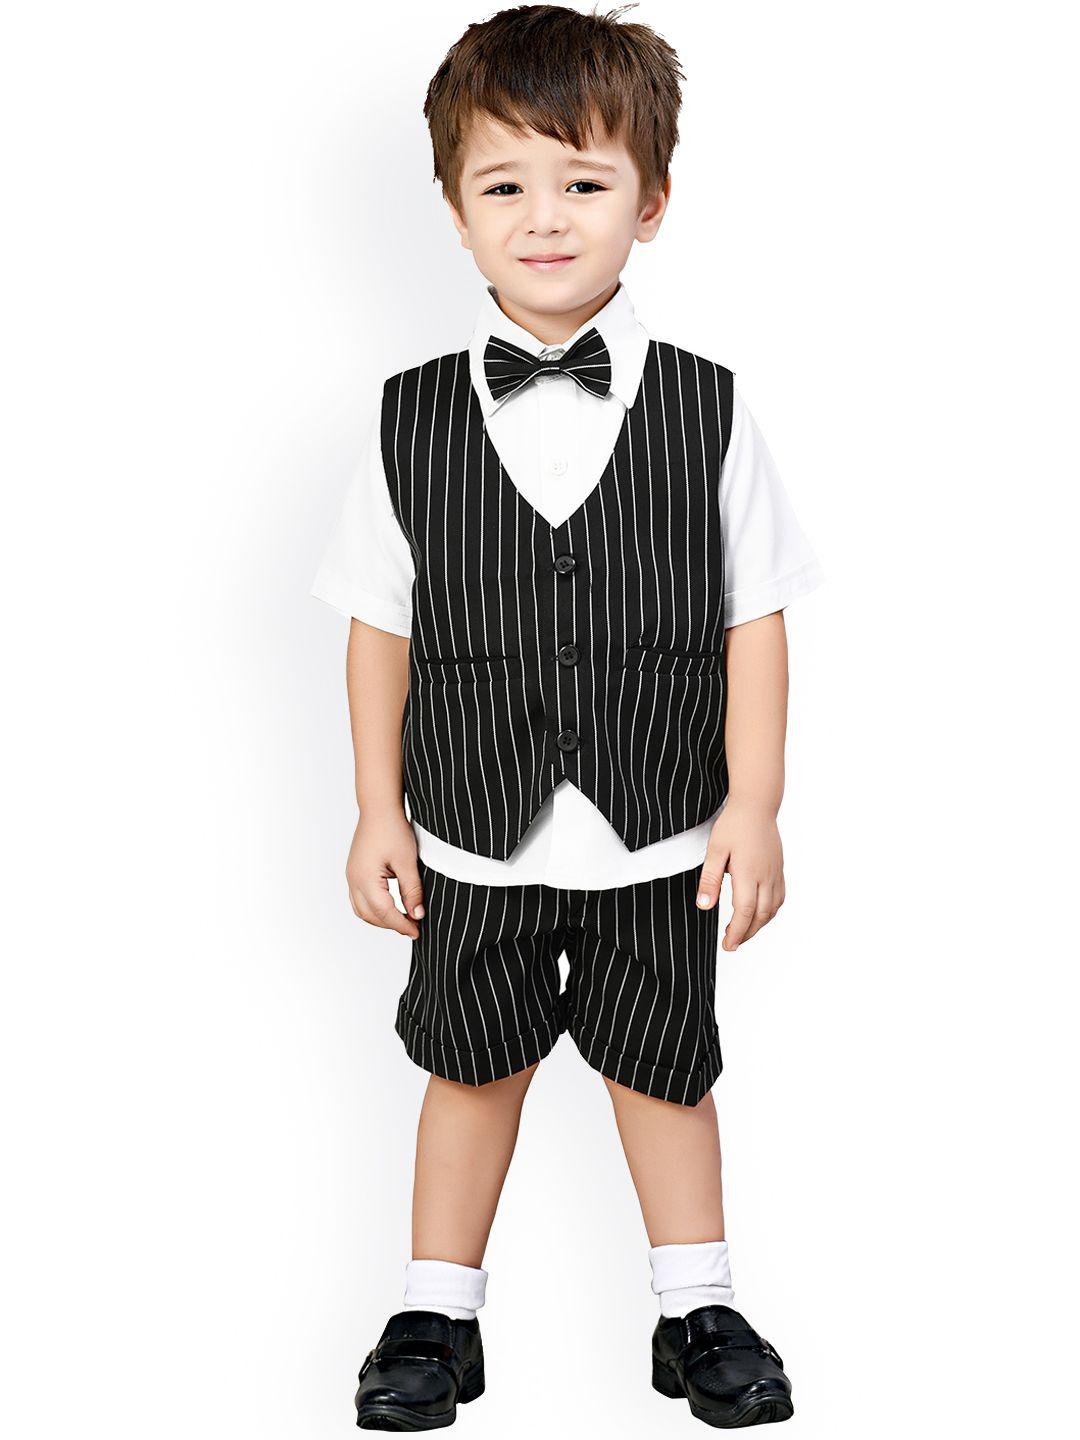 jeetethnics-boys-black-&-white-striped-shirt-with-shorts